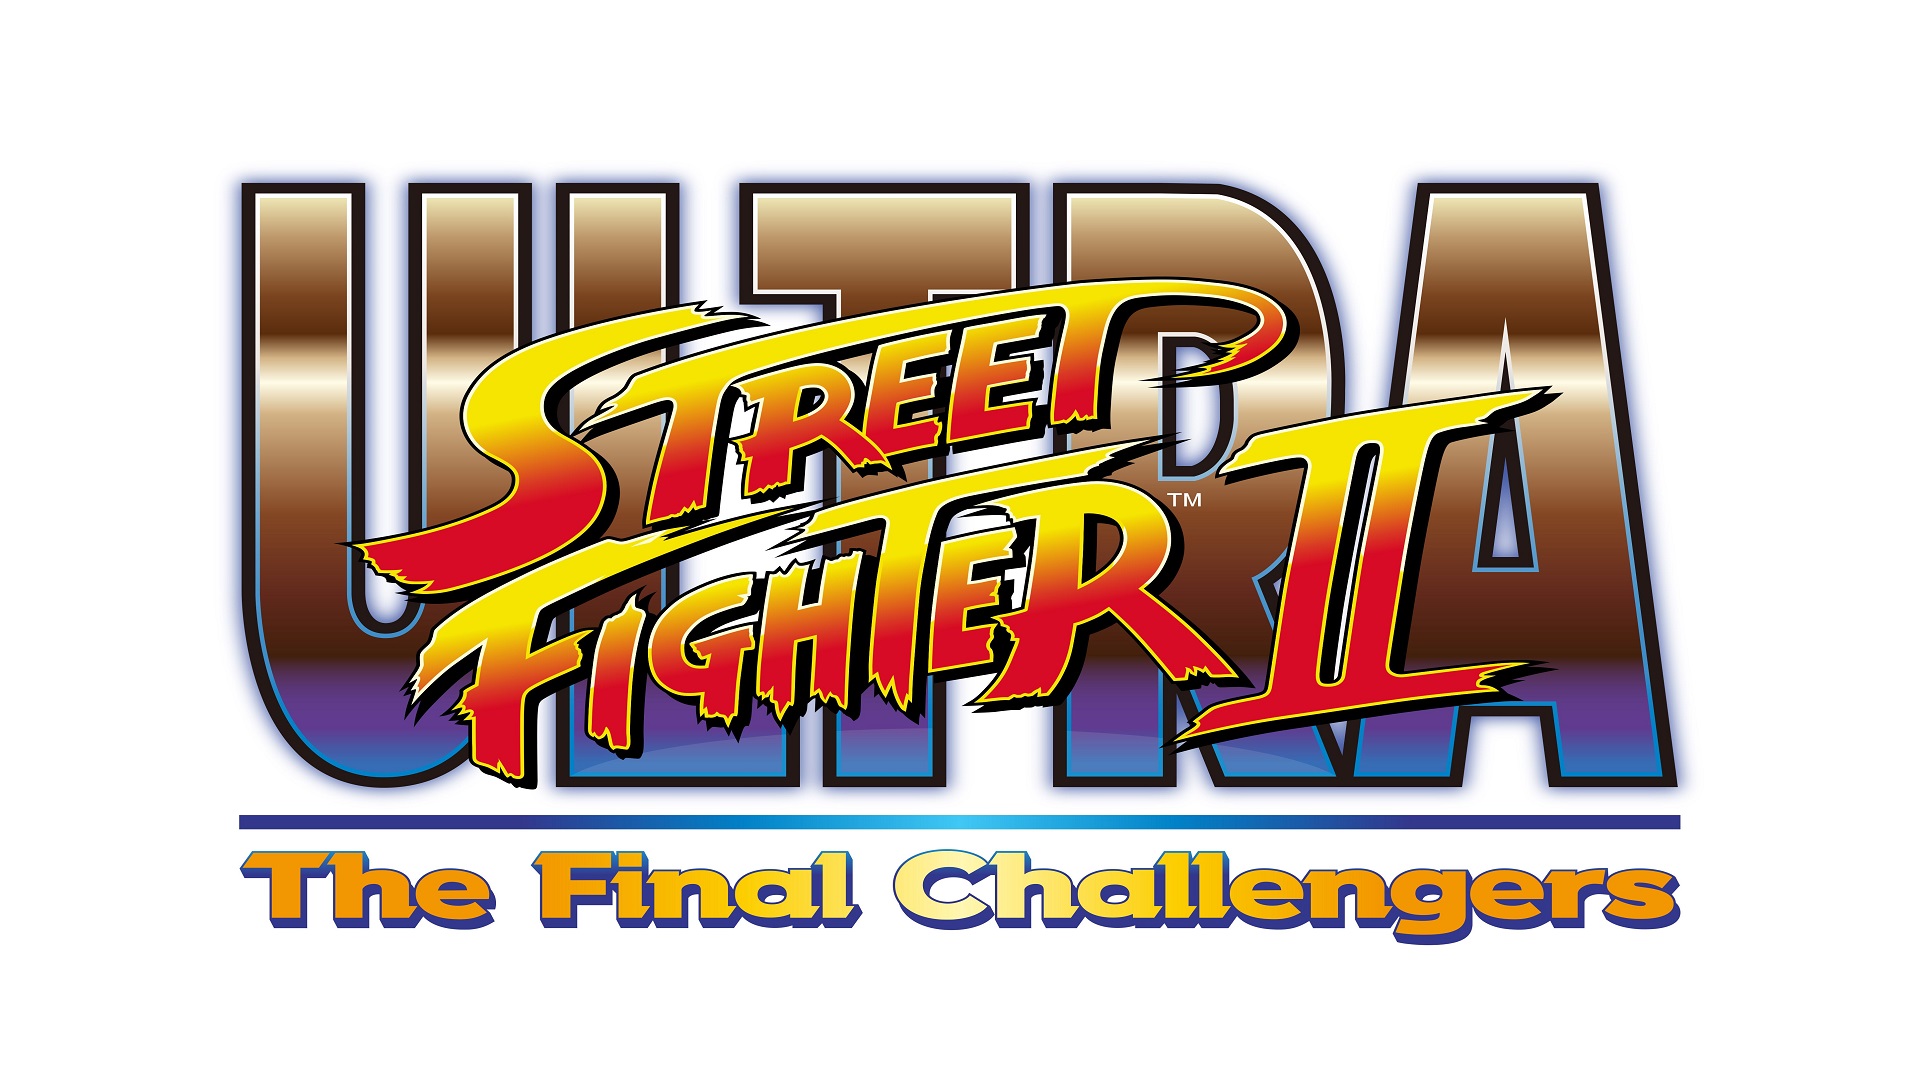 Ultra Street Fighter II: The Final Challengers - Nintendo Switch